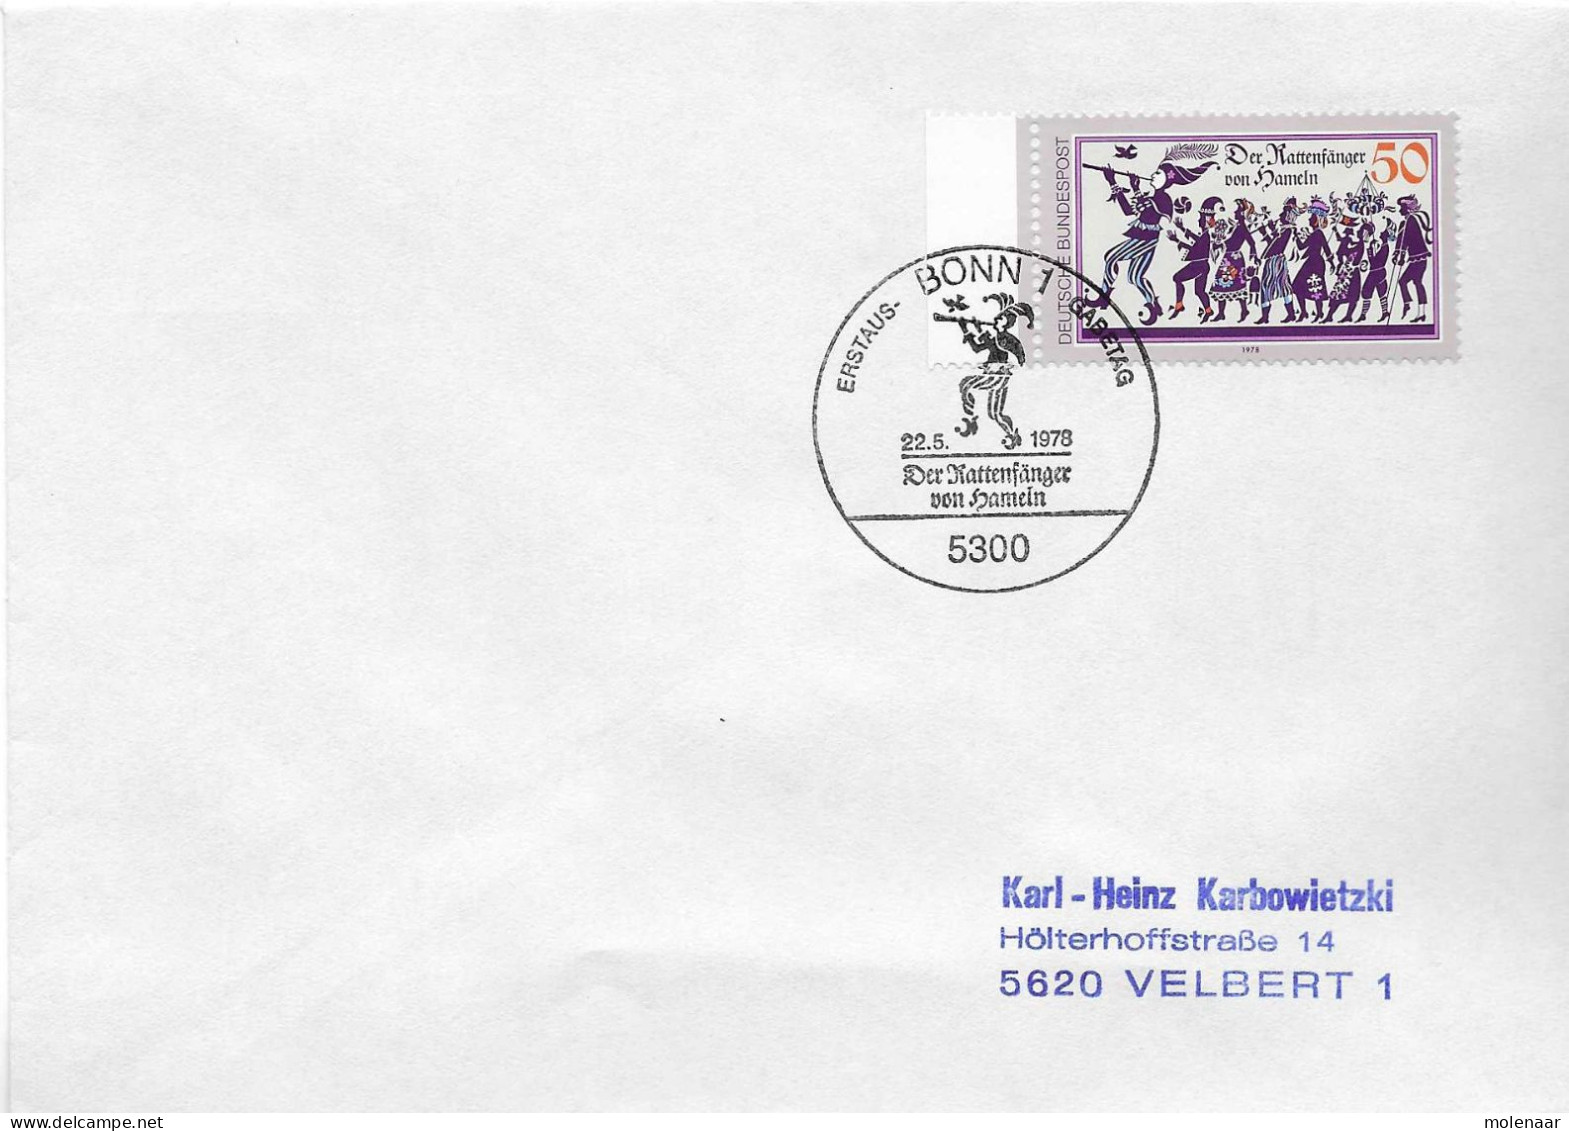 Postzegels > Europa > Duitsland > West-Duitsland > 1970-1979 > Brief Met No. 972 (17367) - Covers & Documents